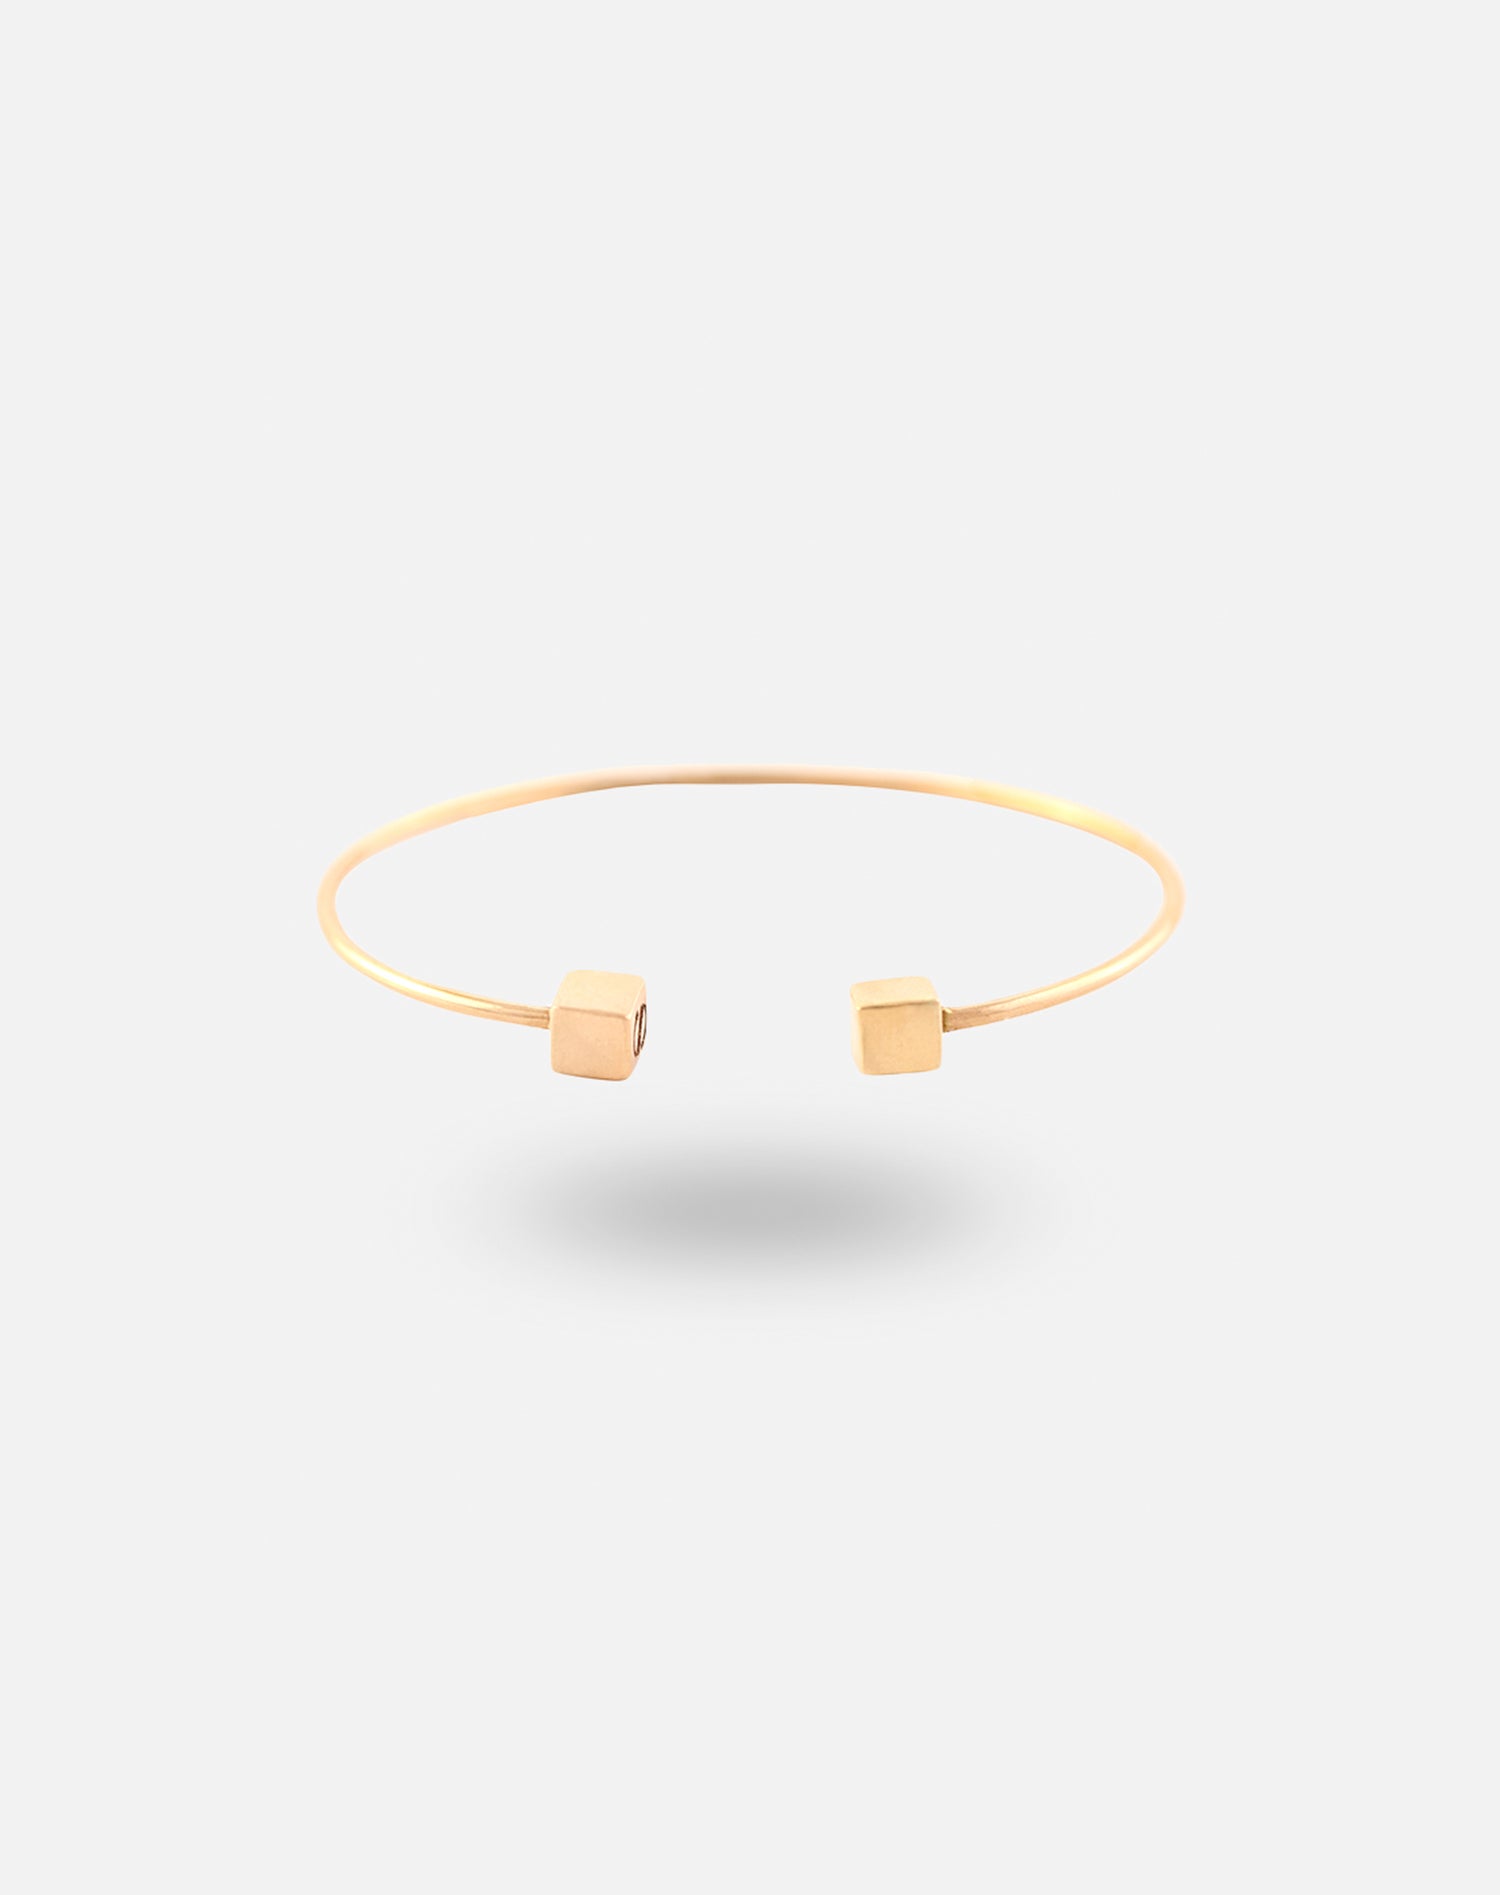 Real Seashell Gold Charm Bracelet | eBay